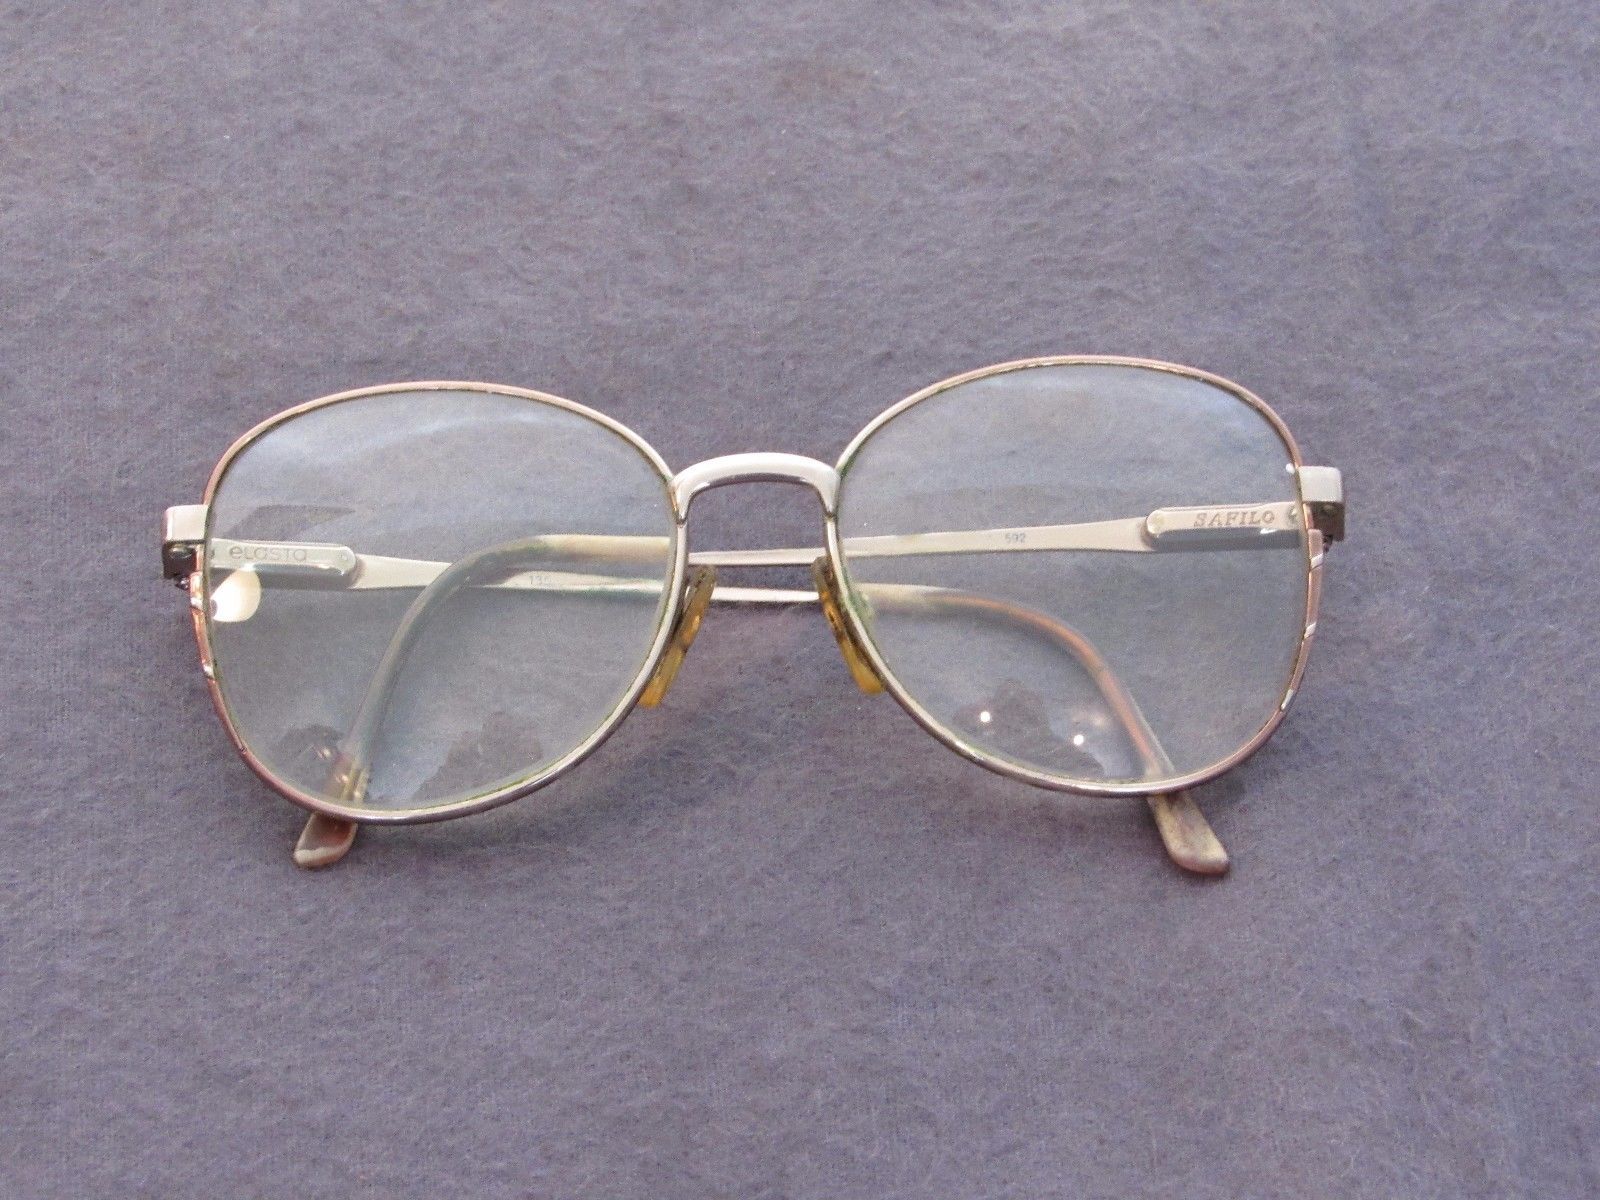 Prop Elosto Safilo Vtg Full Rim Metal Eyewear Retro Eyeglasses Glasses Frames - $24.87